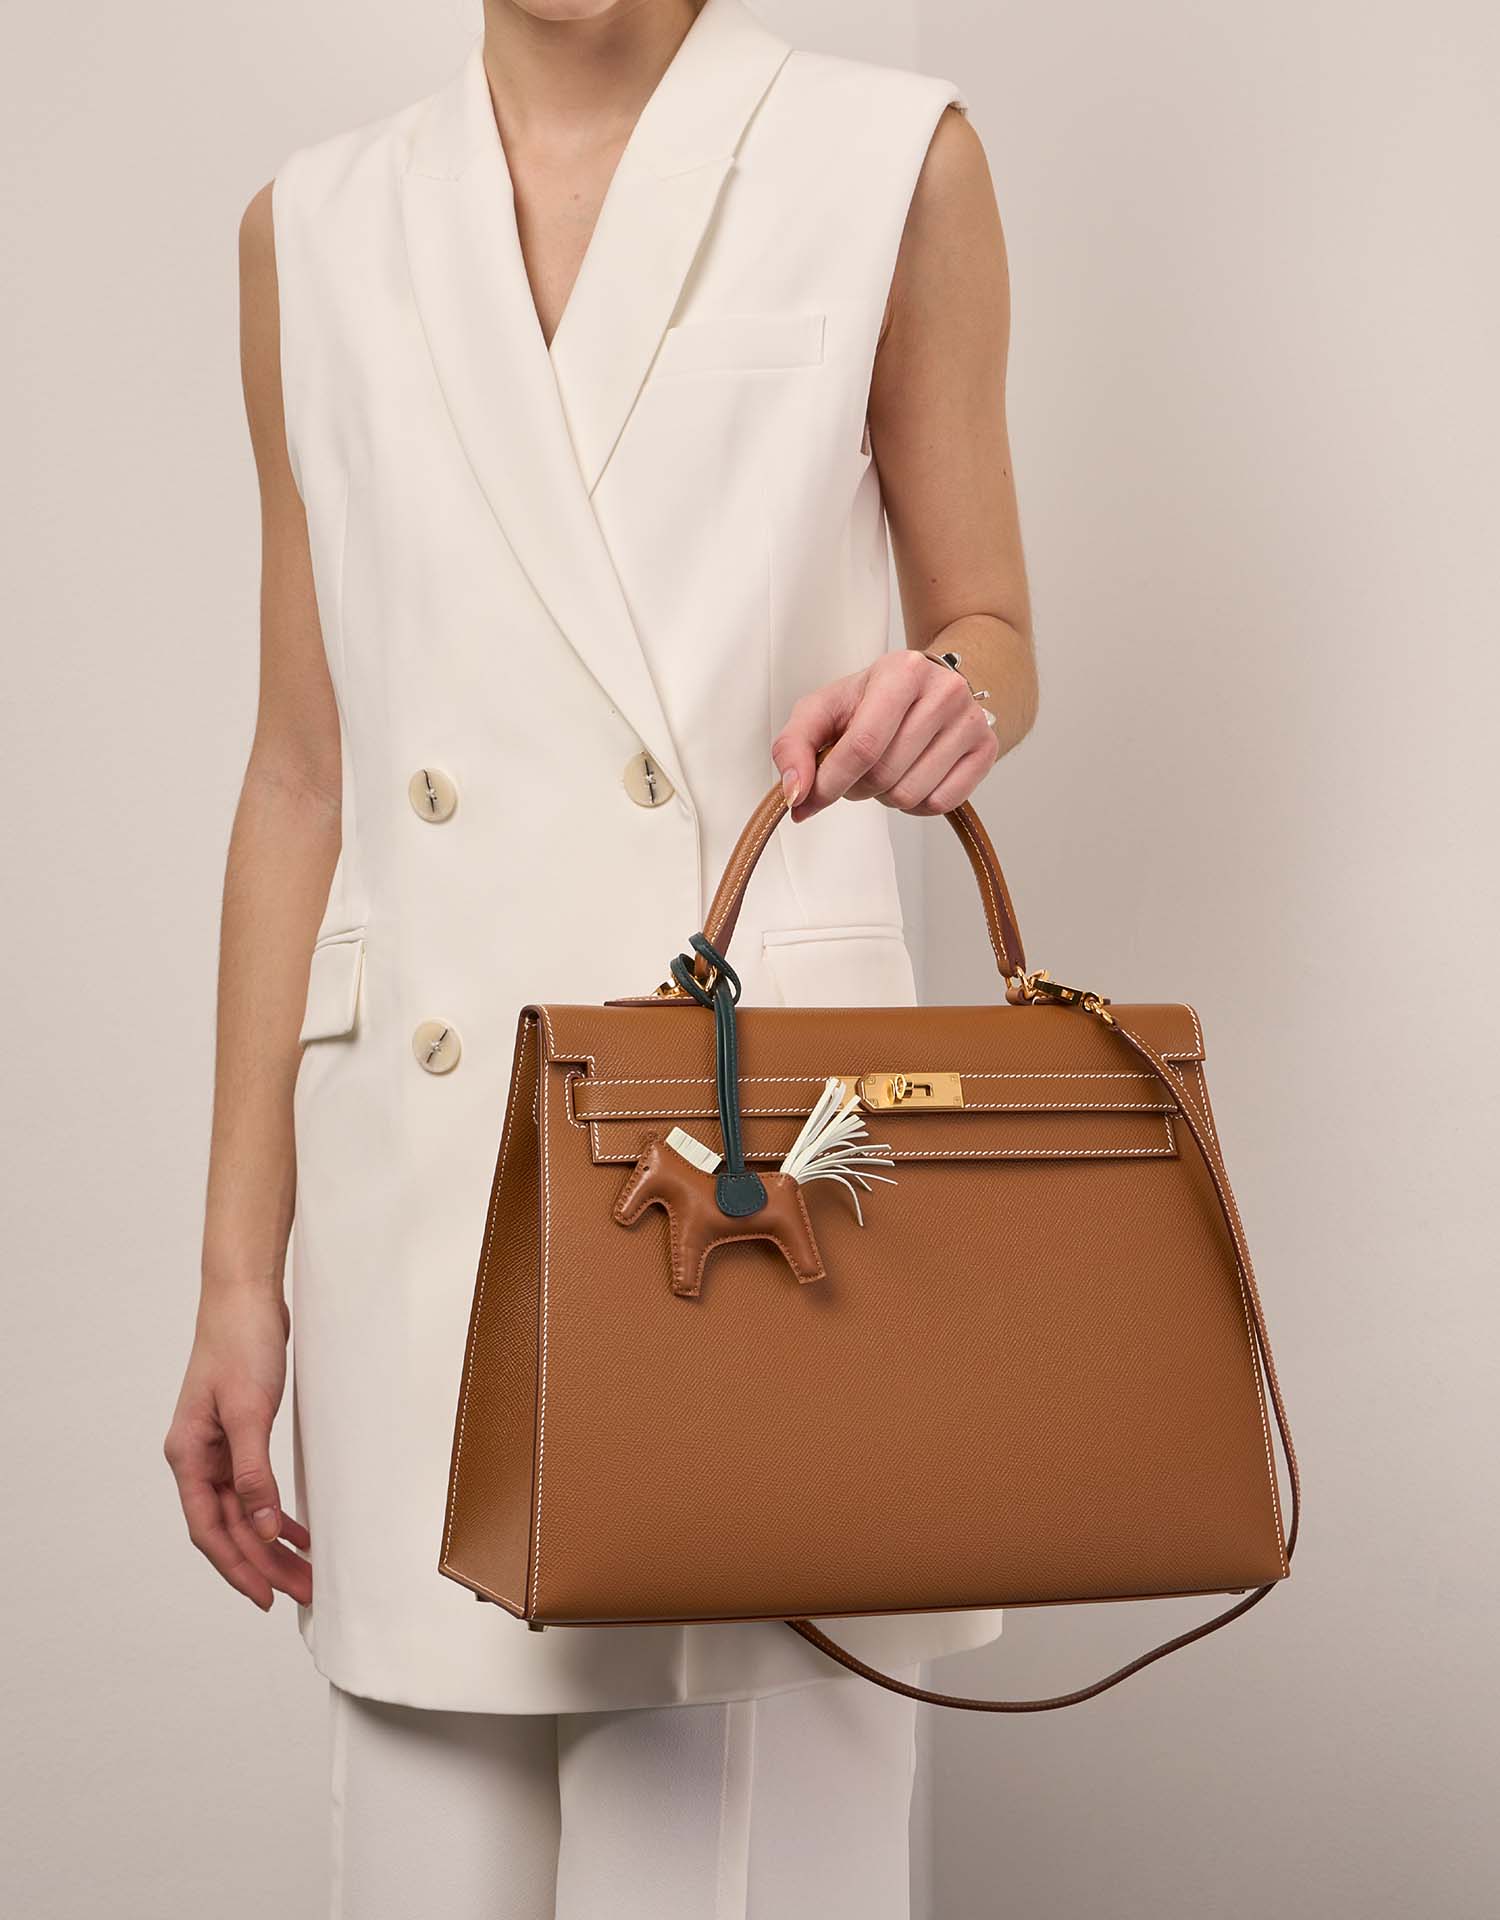 Amazing Hermès Kelly 35 handbag with strap in epsom yellow lemon